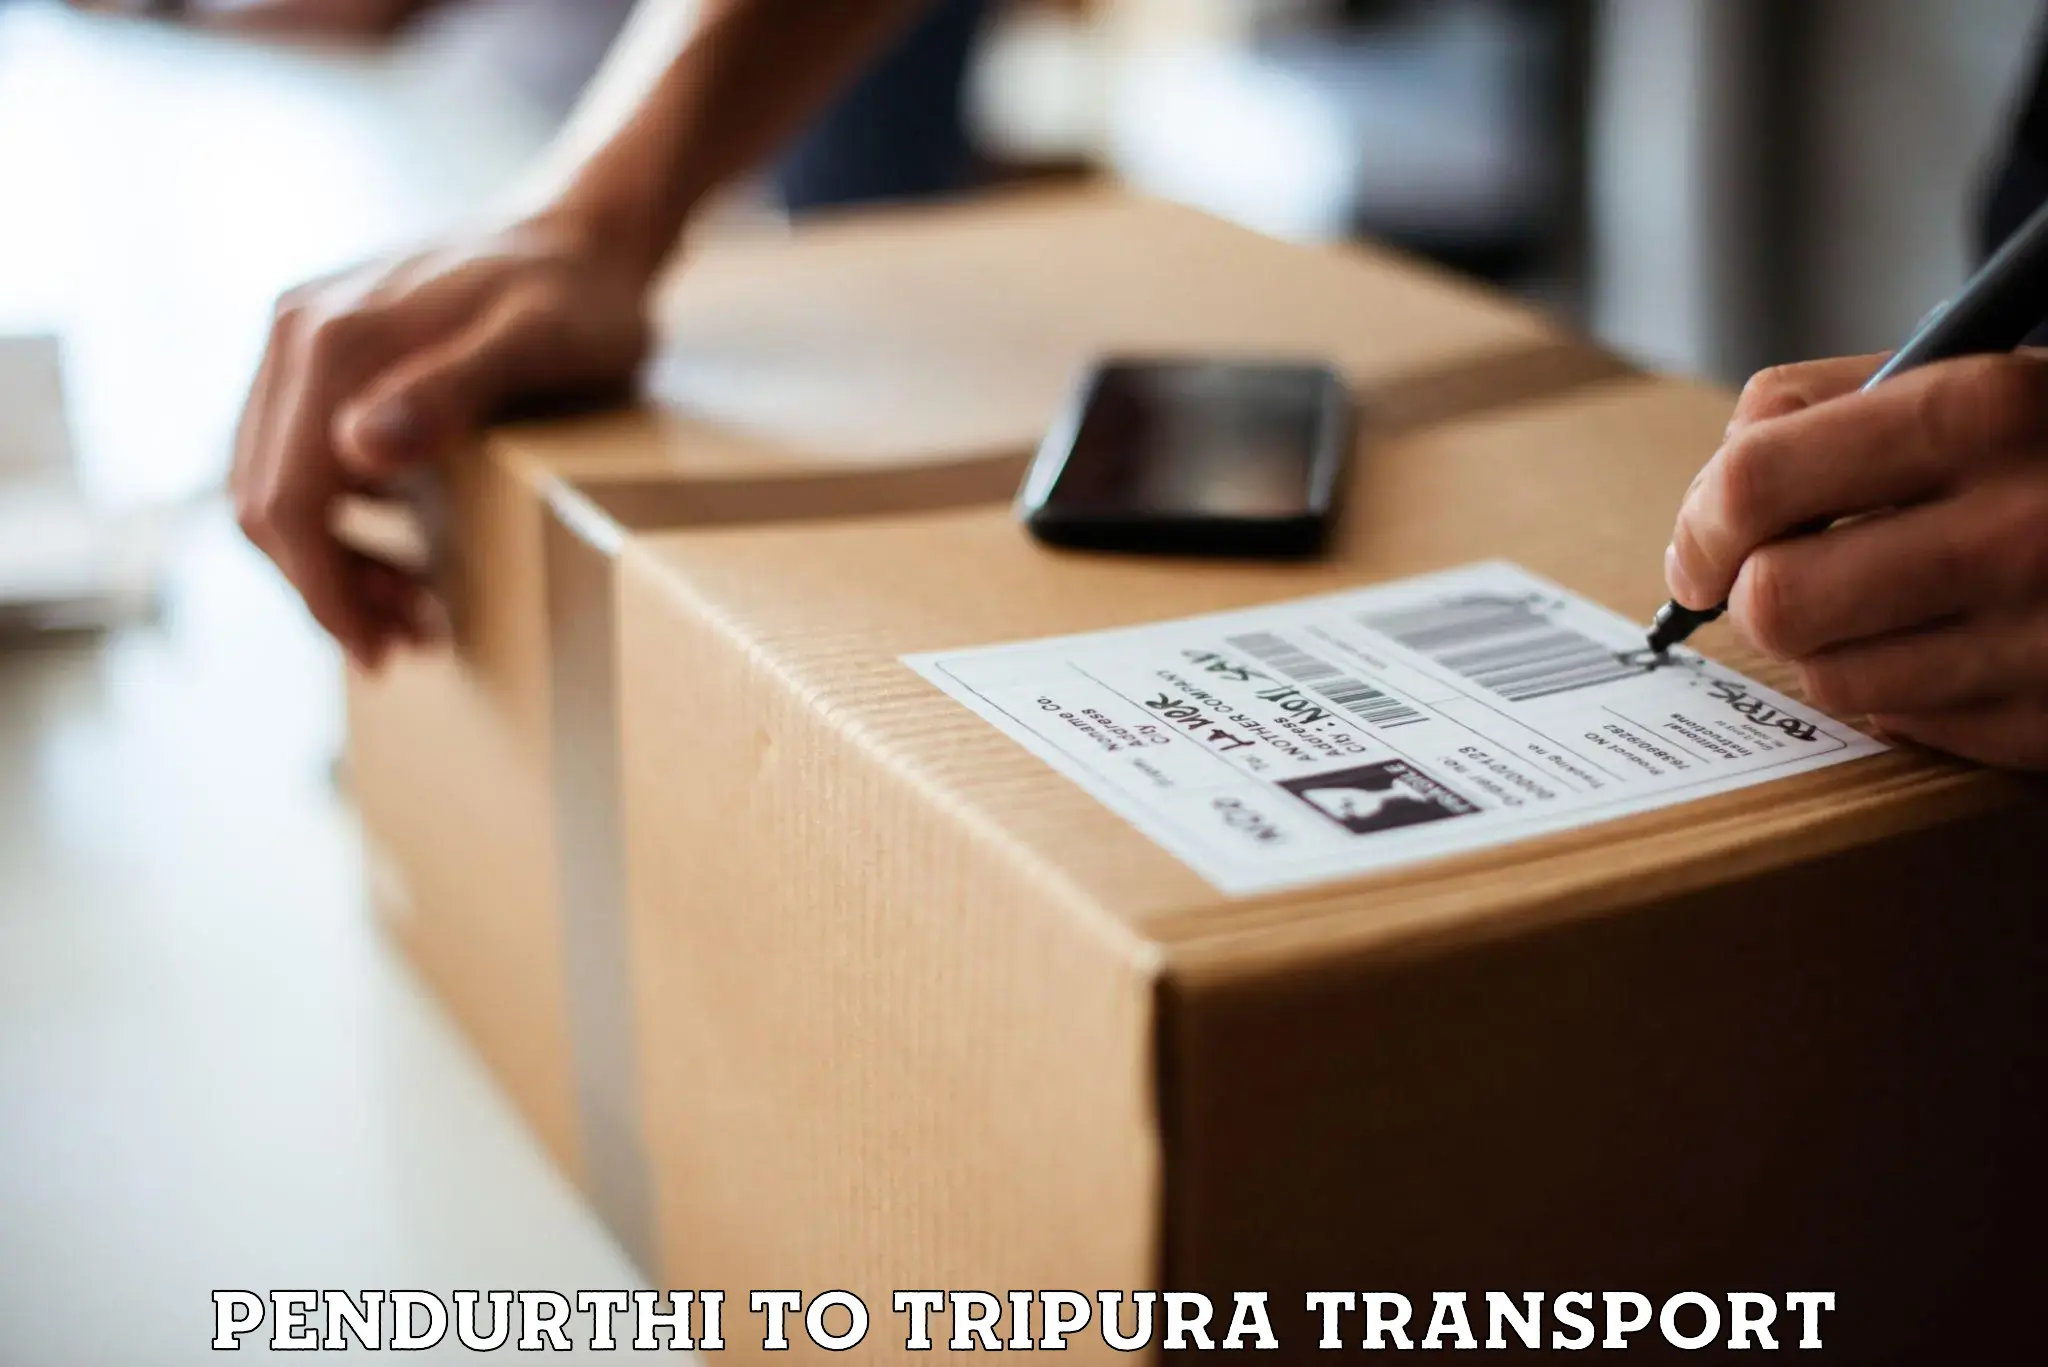 Sending bike to another city Pendurthi to Udaipur Tripura